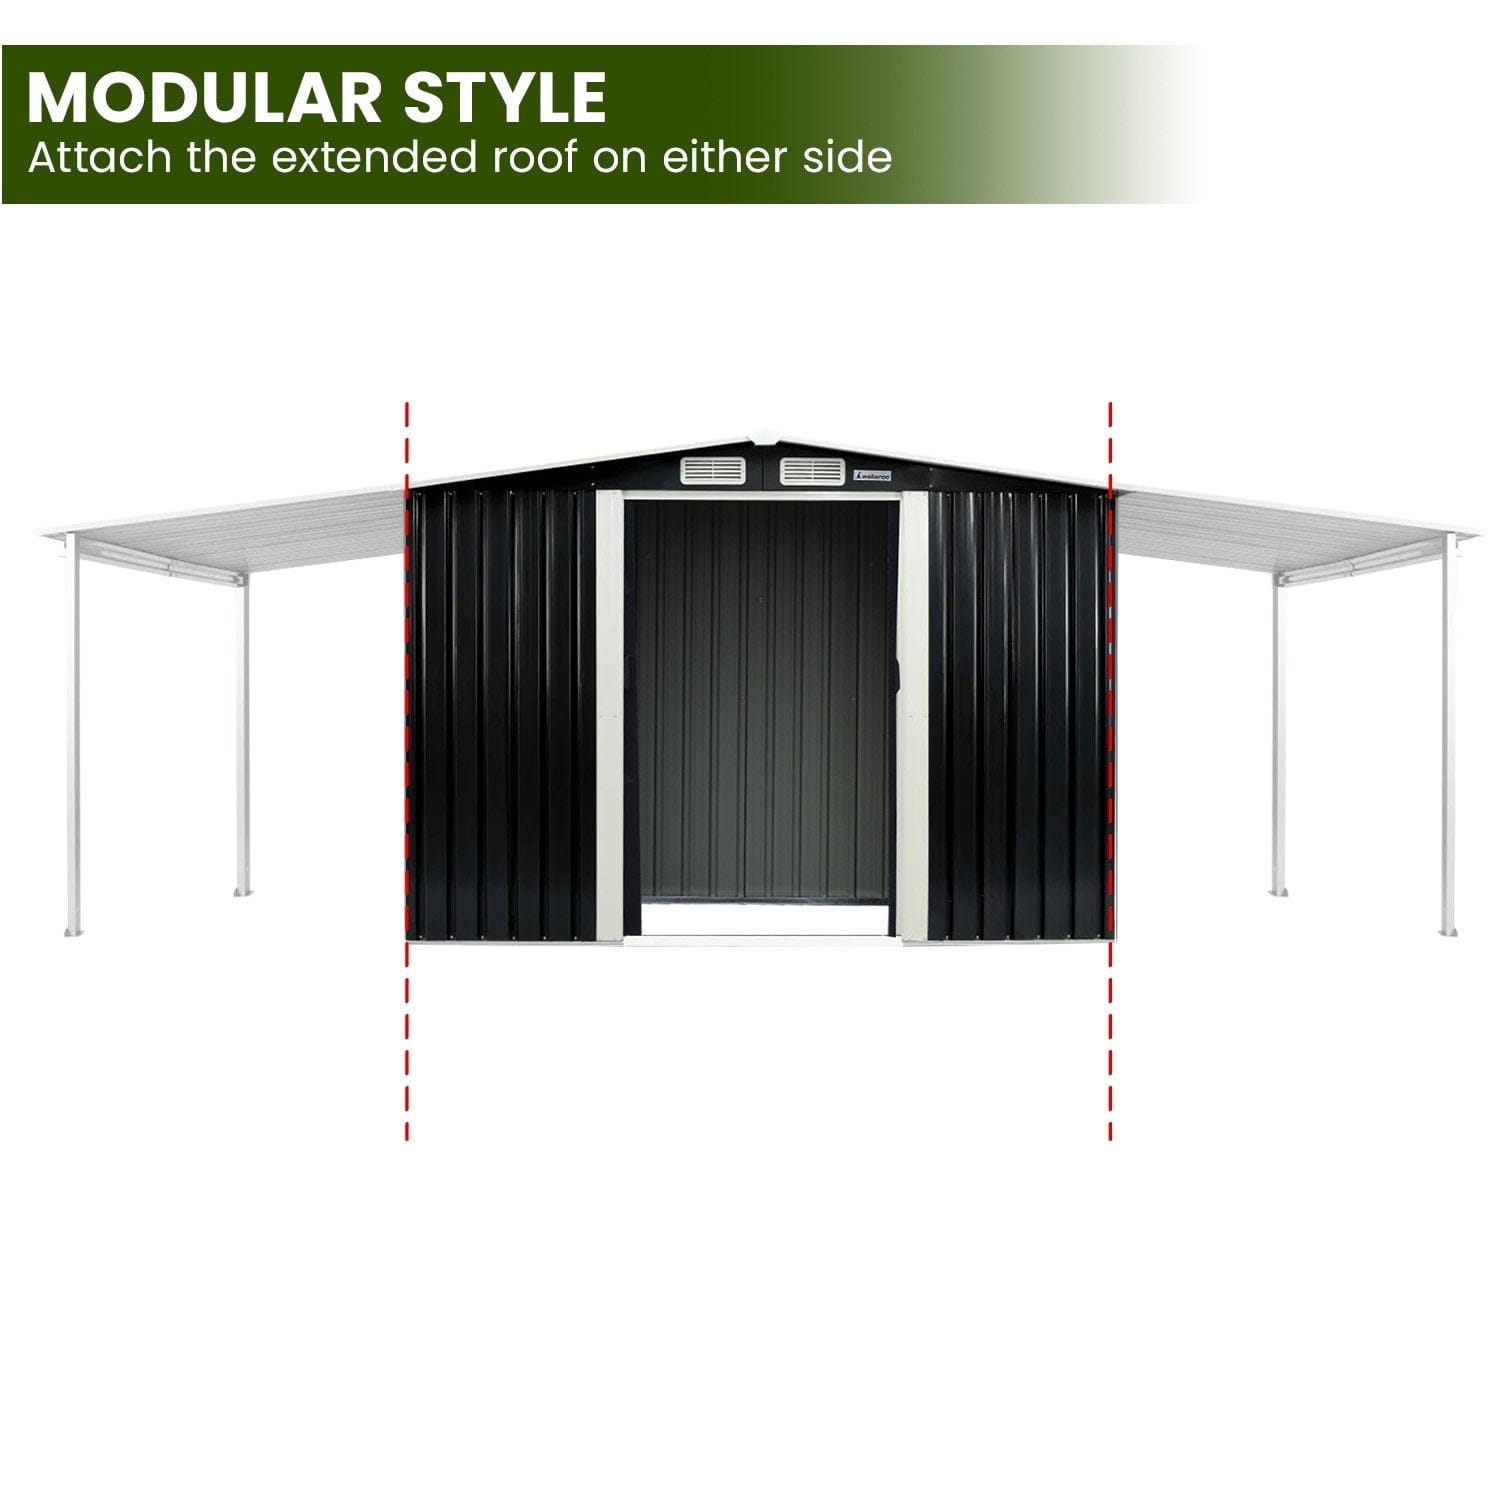 8x8ft Zinc Steel Garden Shed with Open Storage - Black